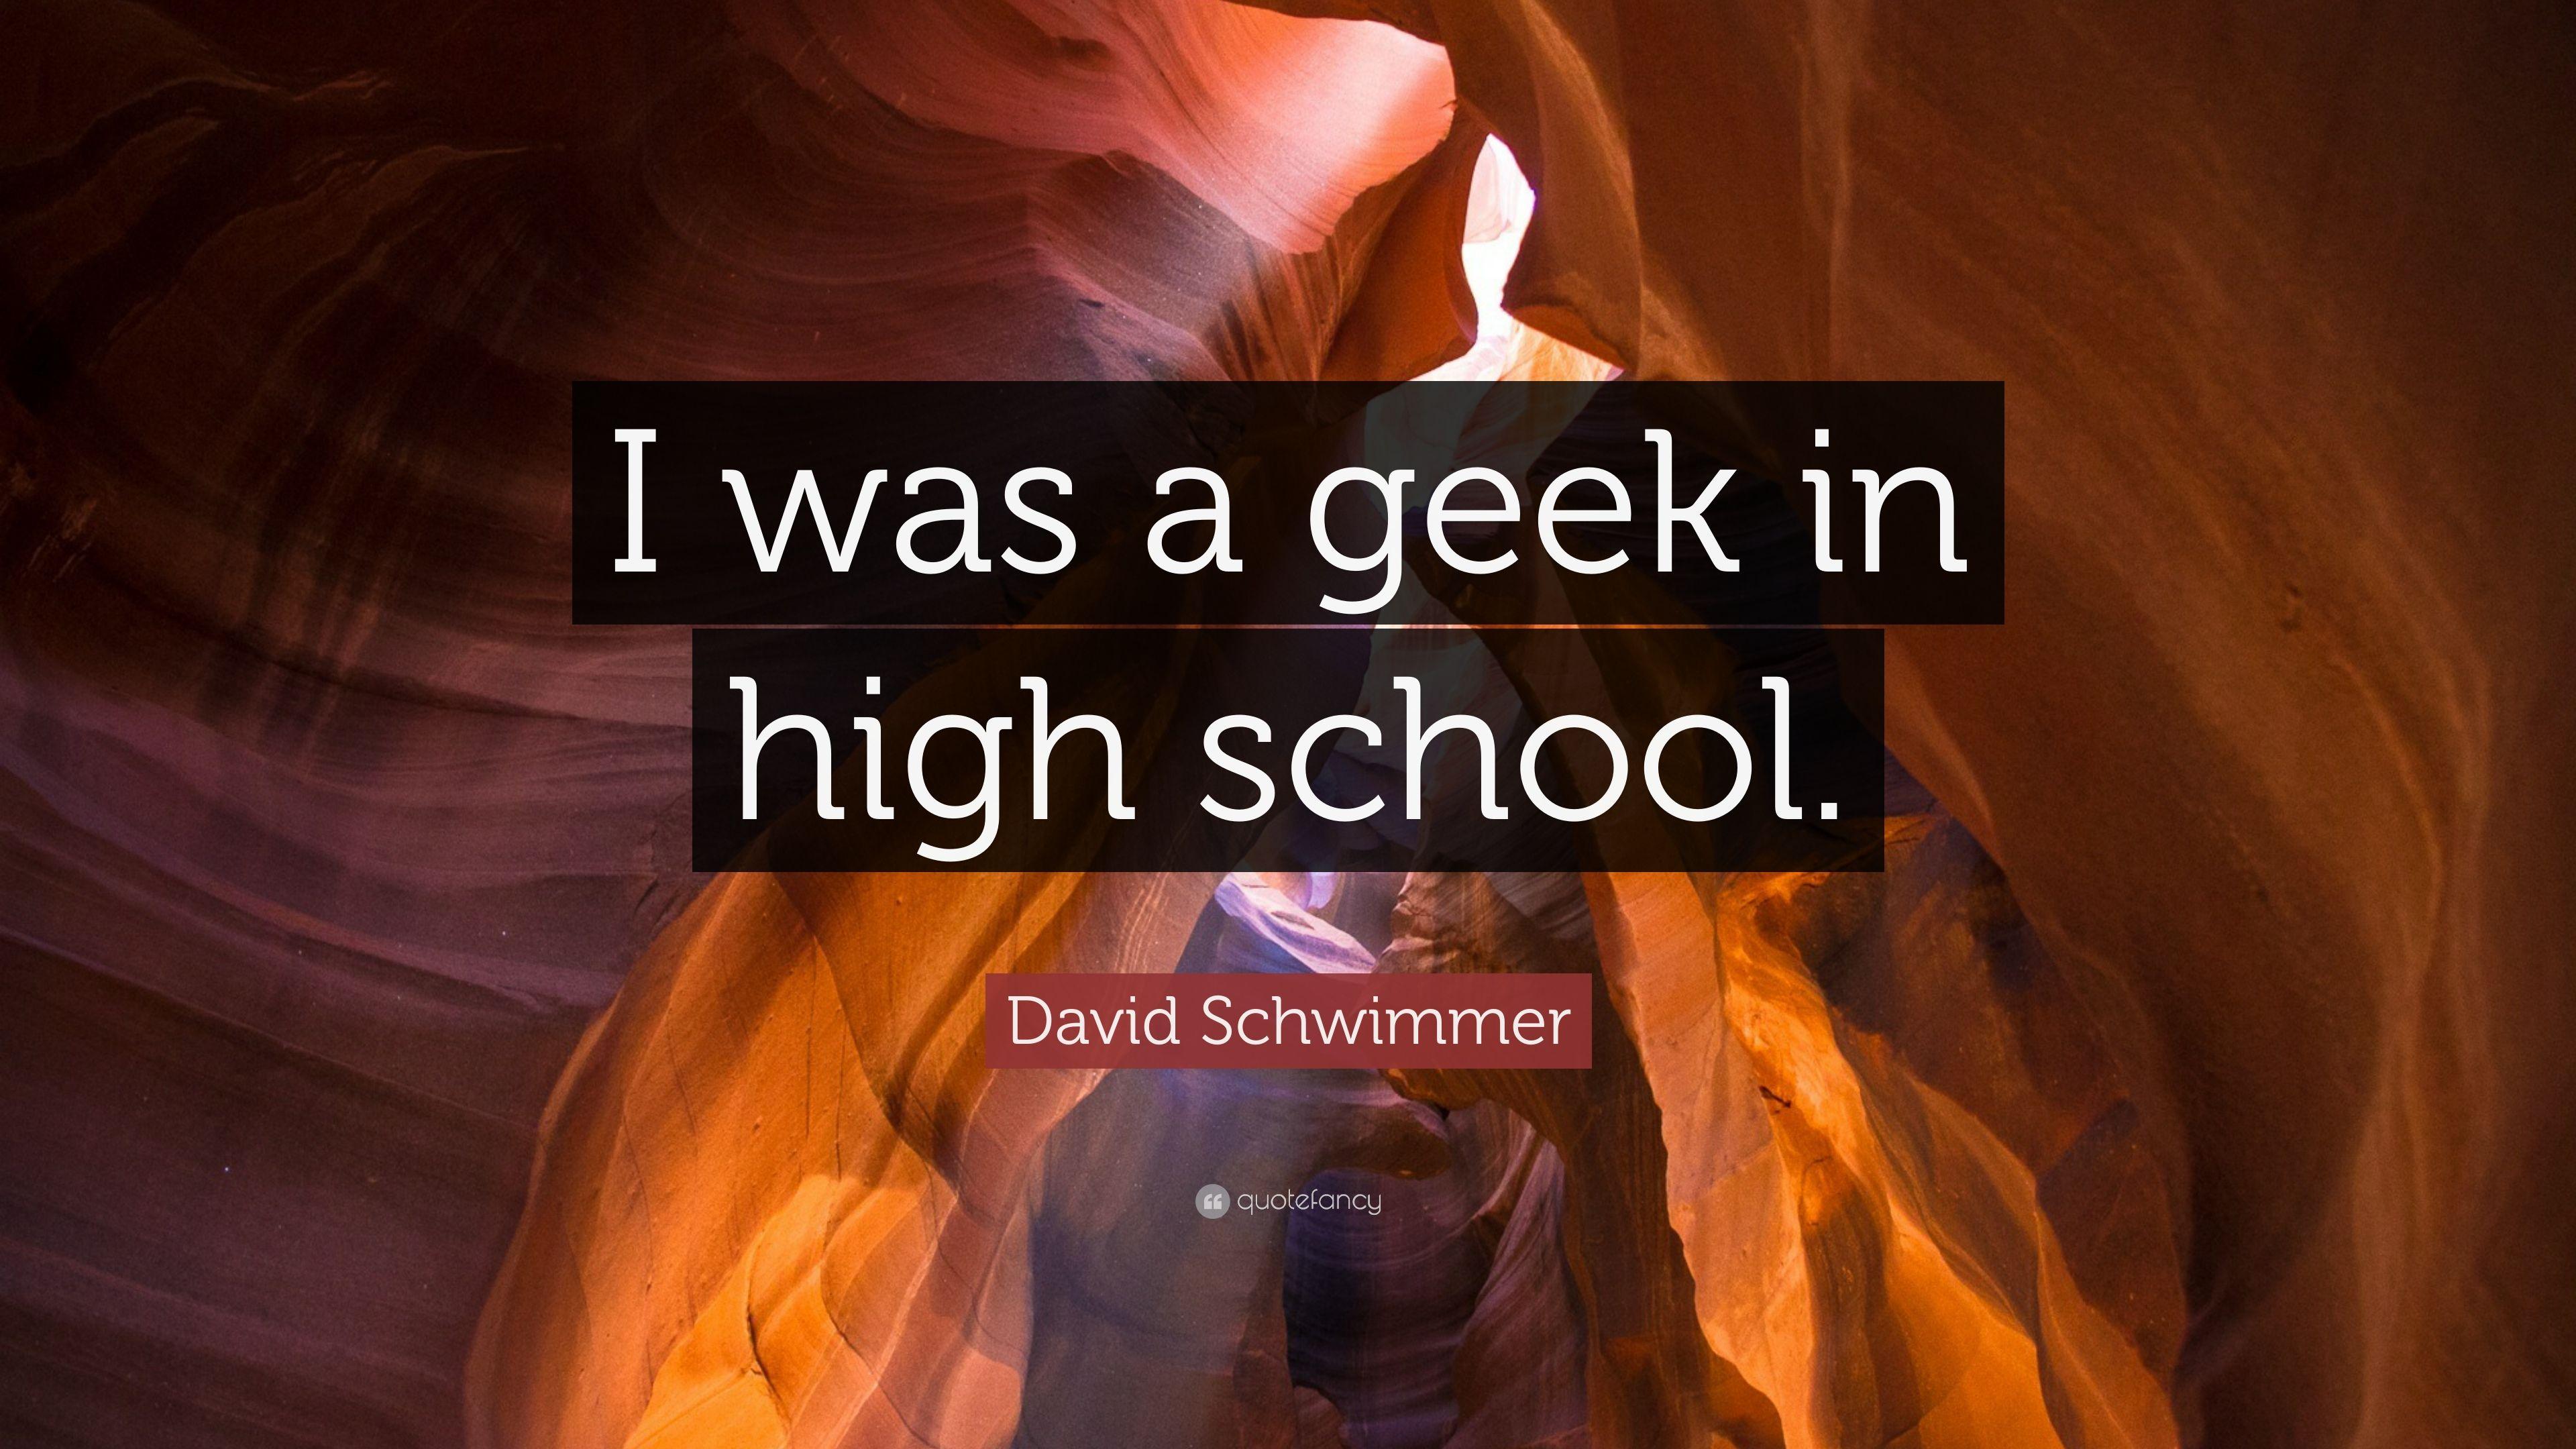 David Schwimmer Quote: “I was a geek in high school.” 7 wallpaper